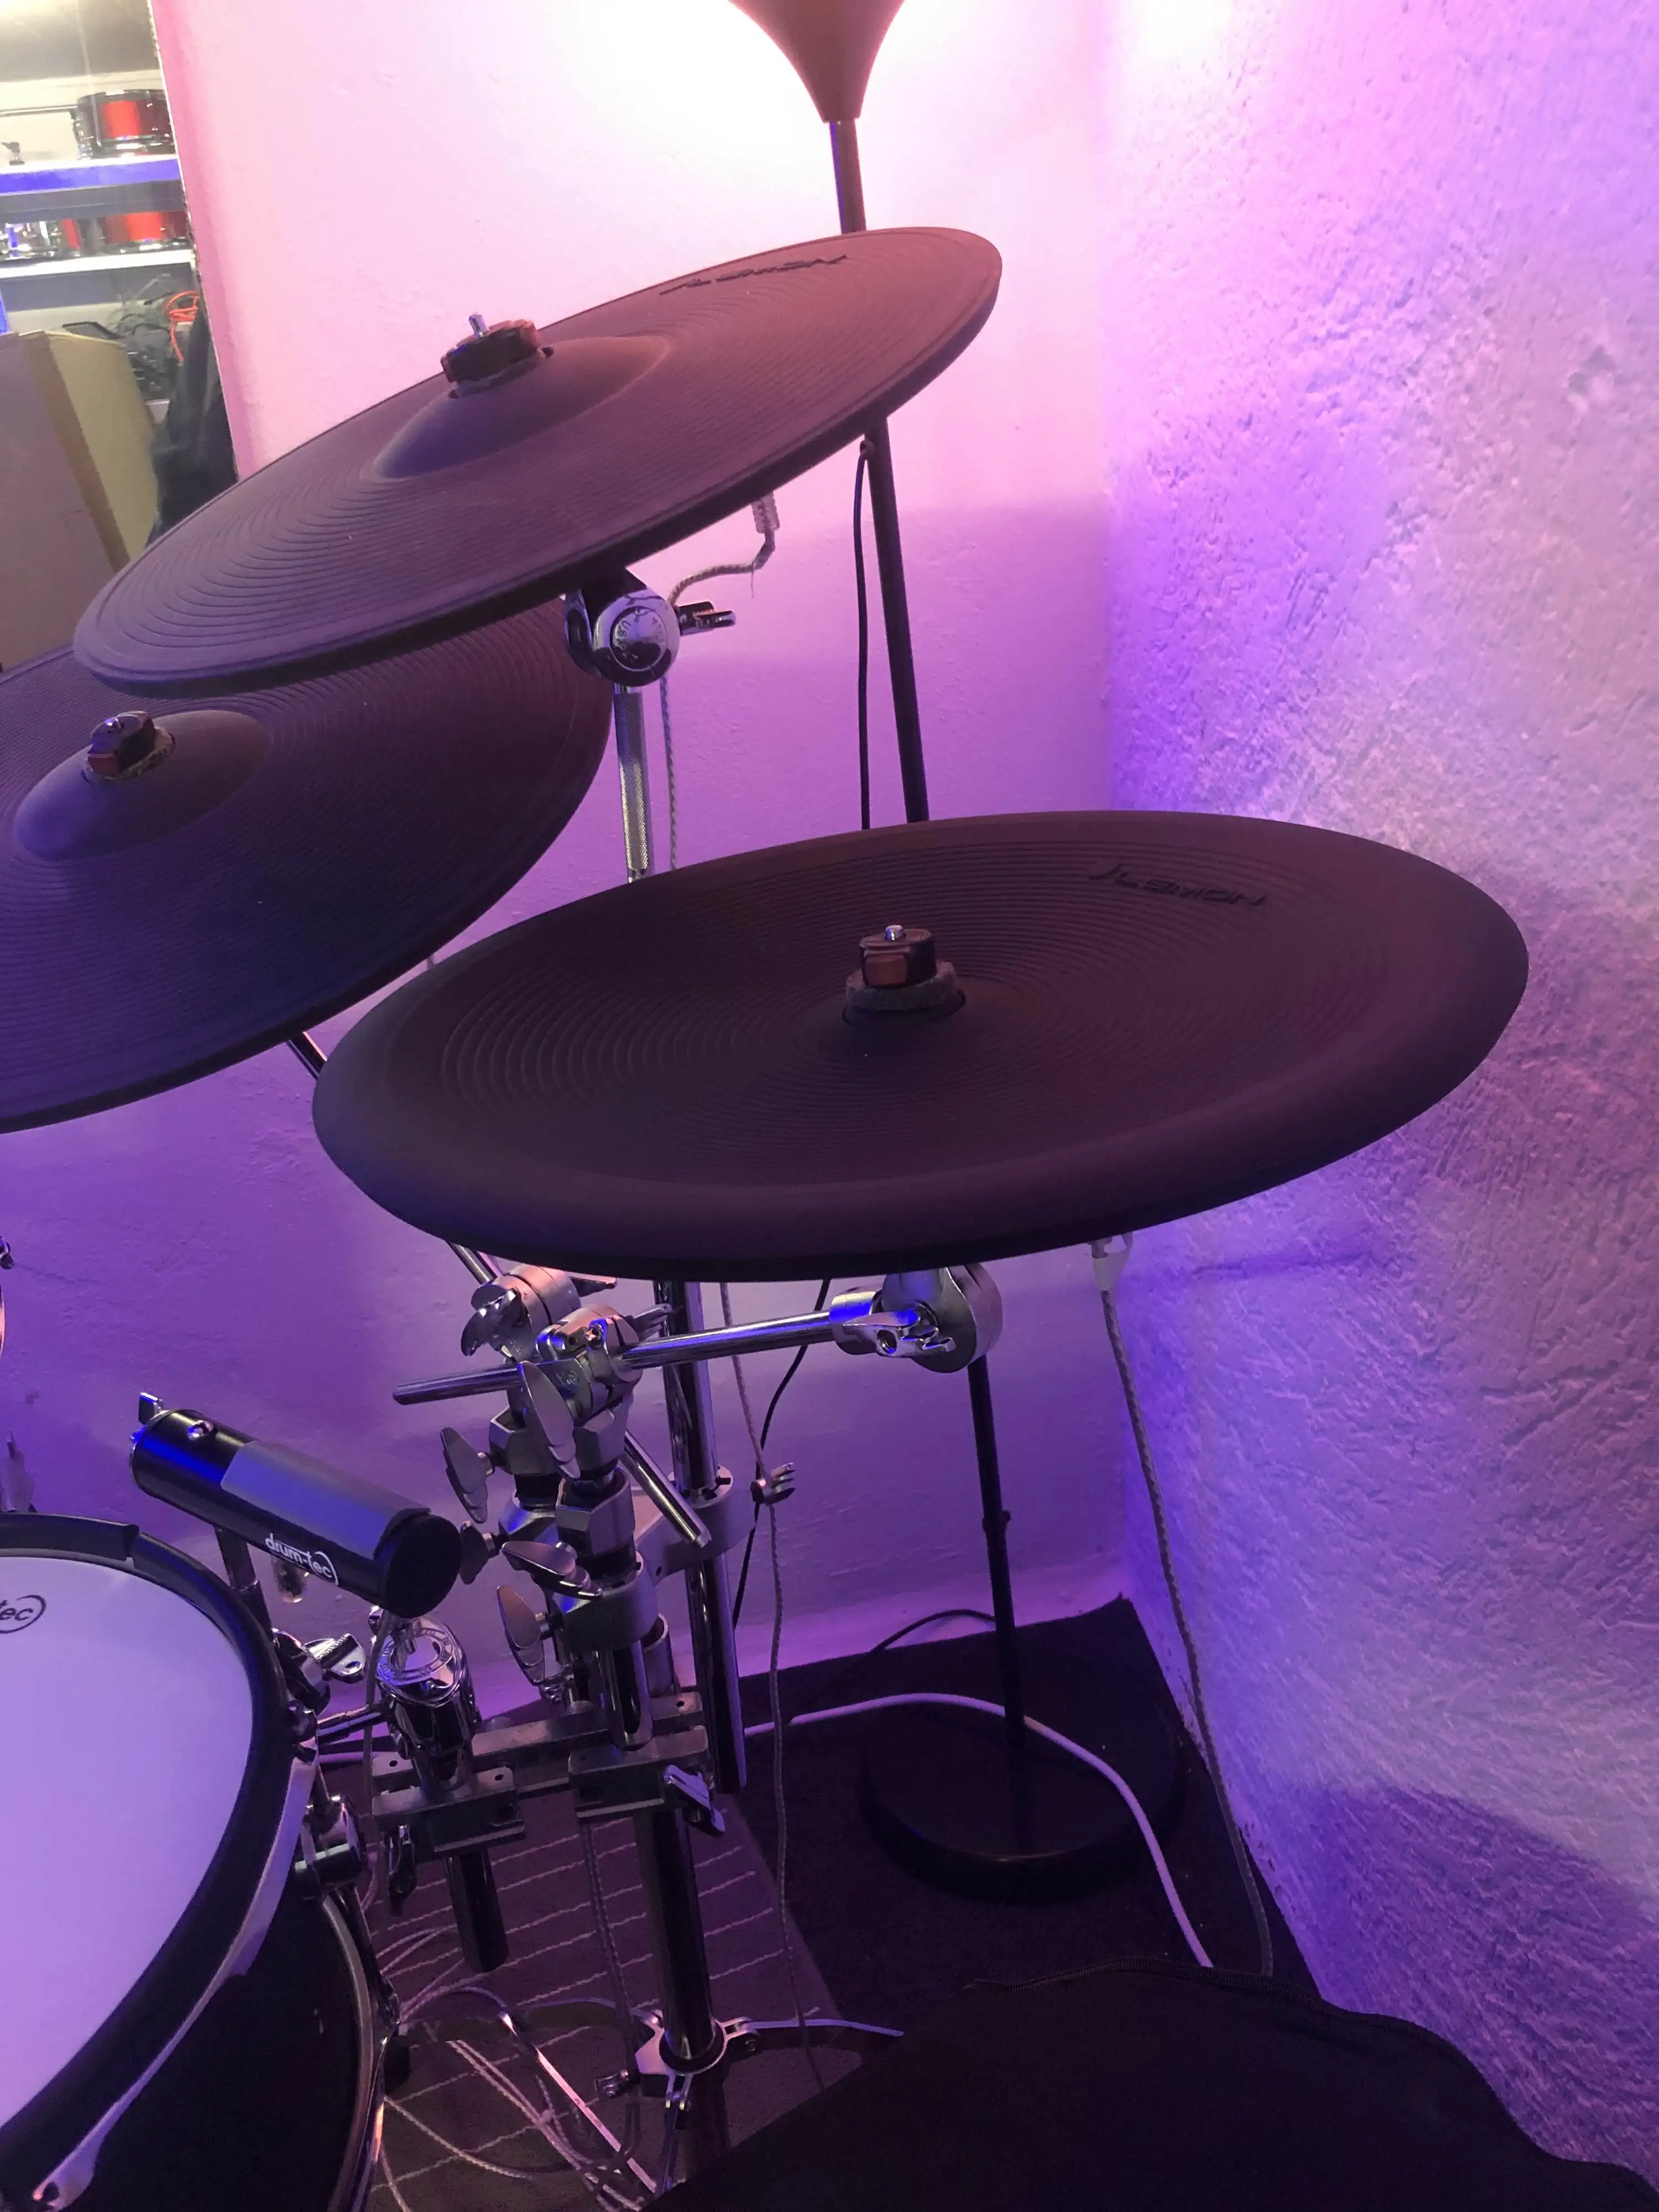 Lemon drum cymbal 15